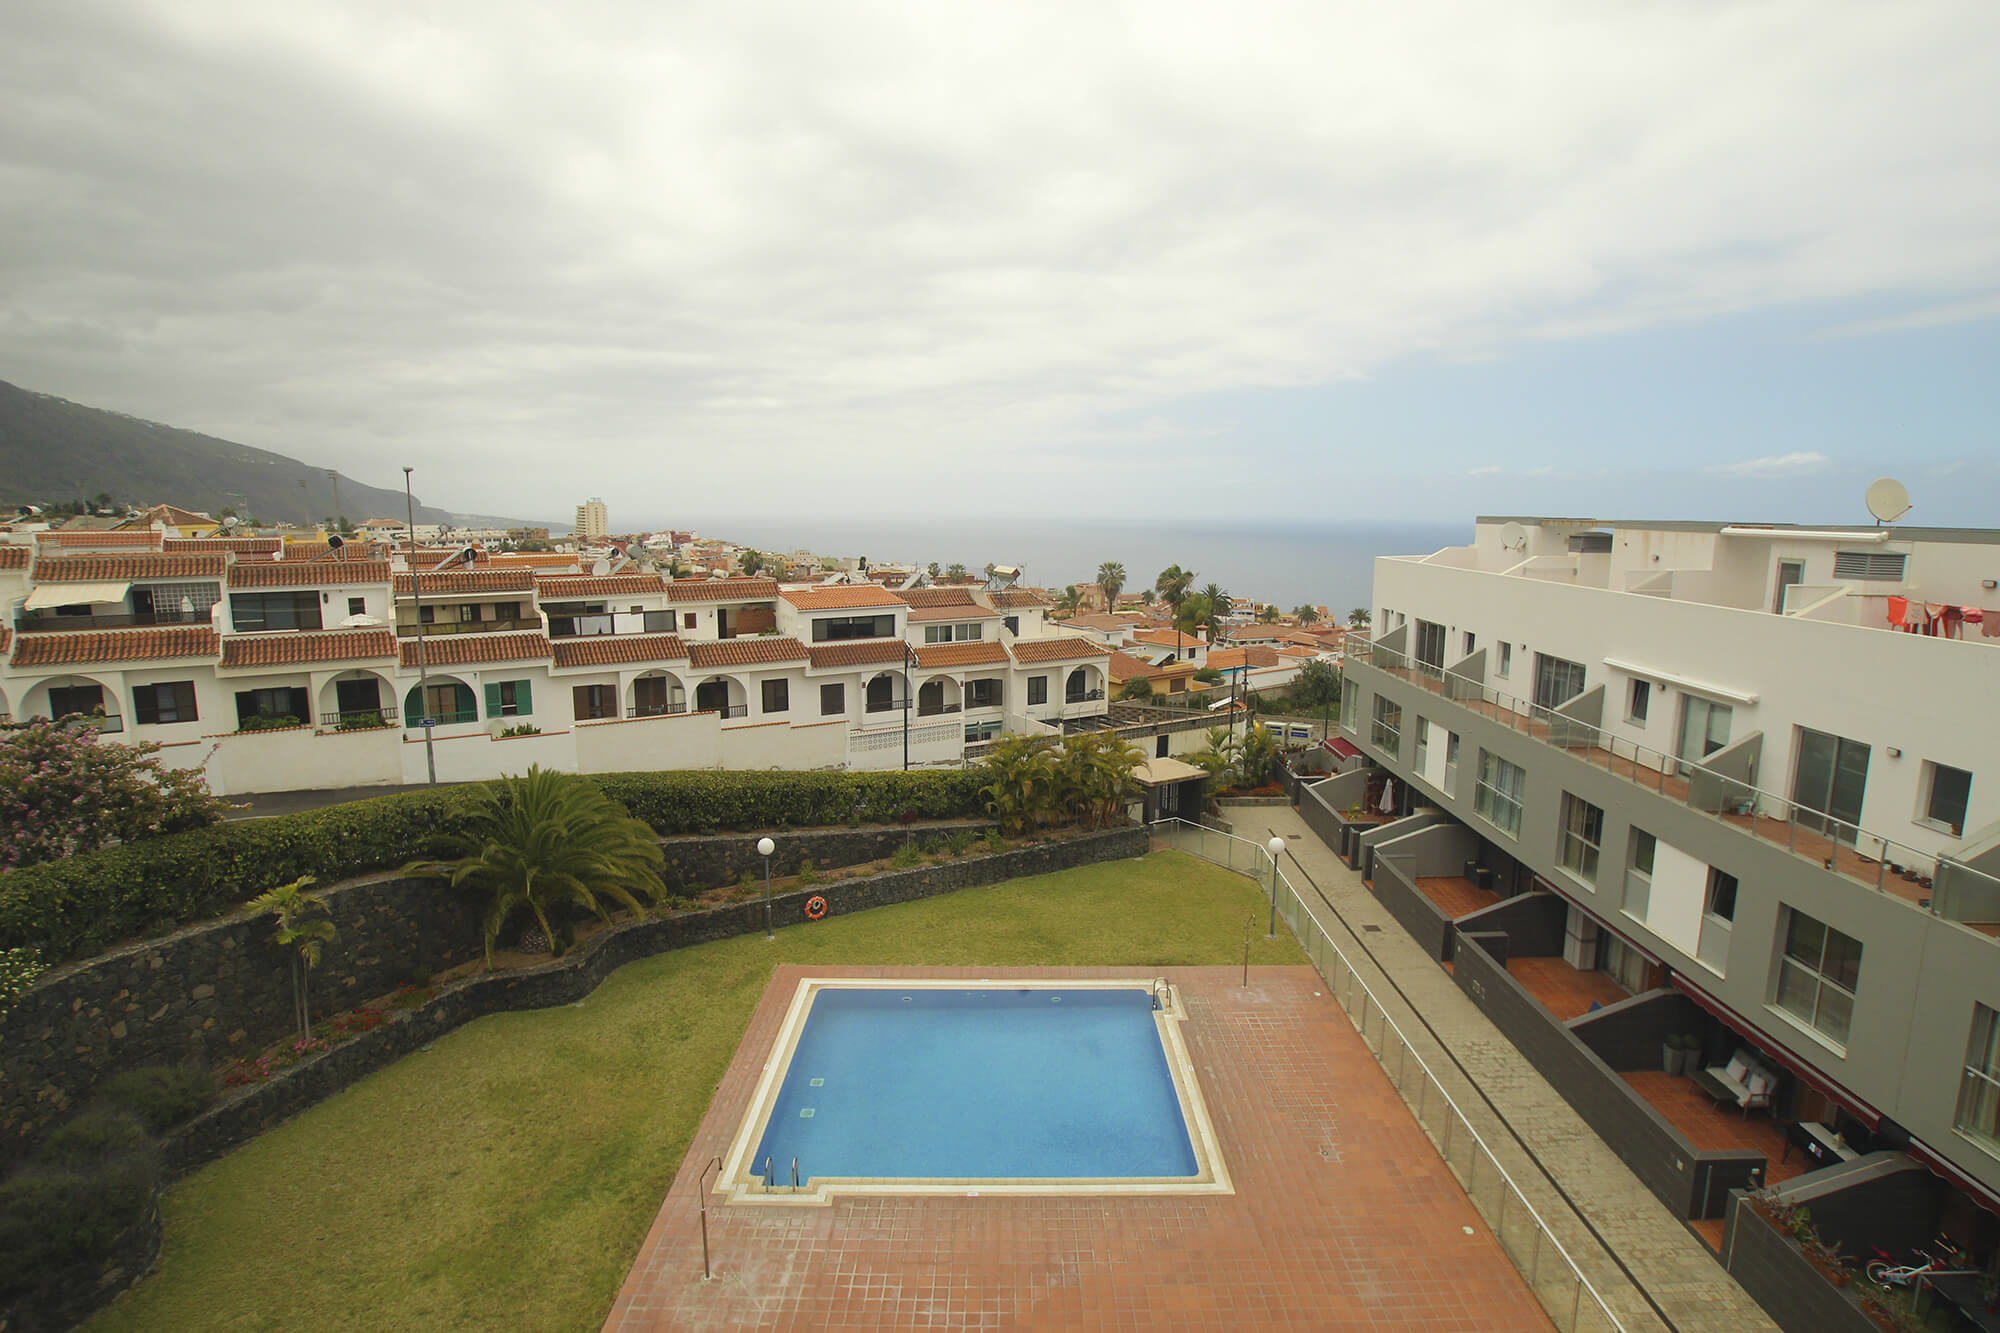 apartment for rent in Tenerife - pool